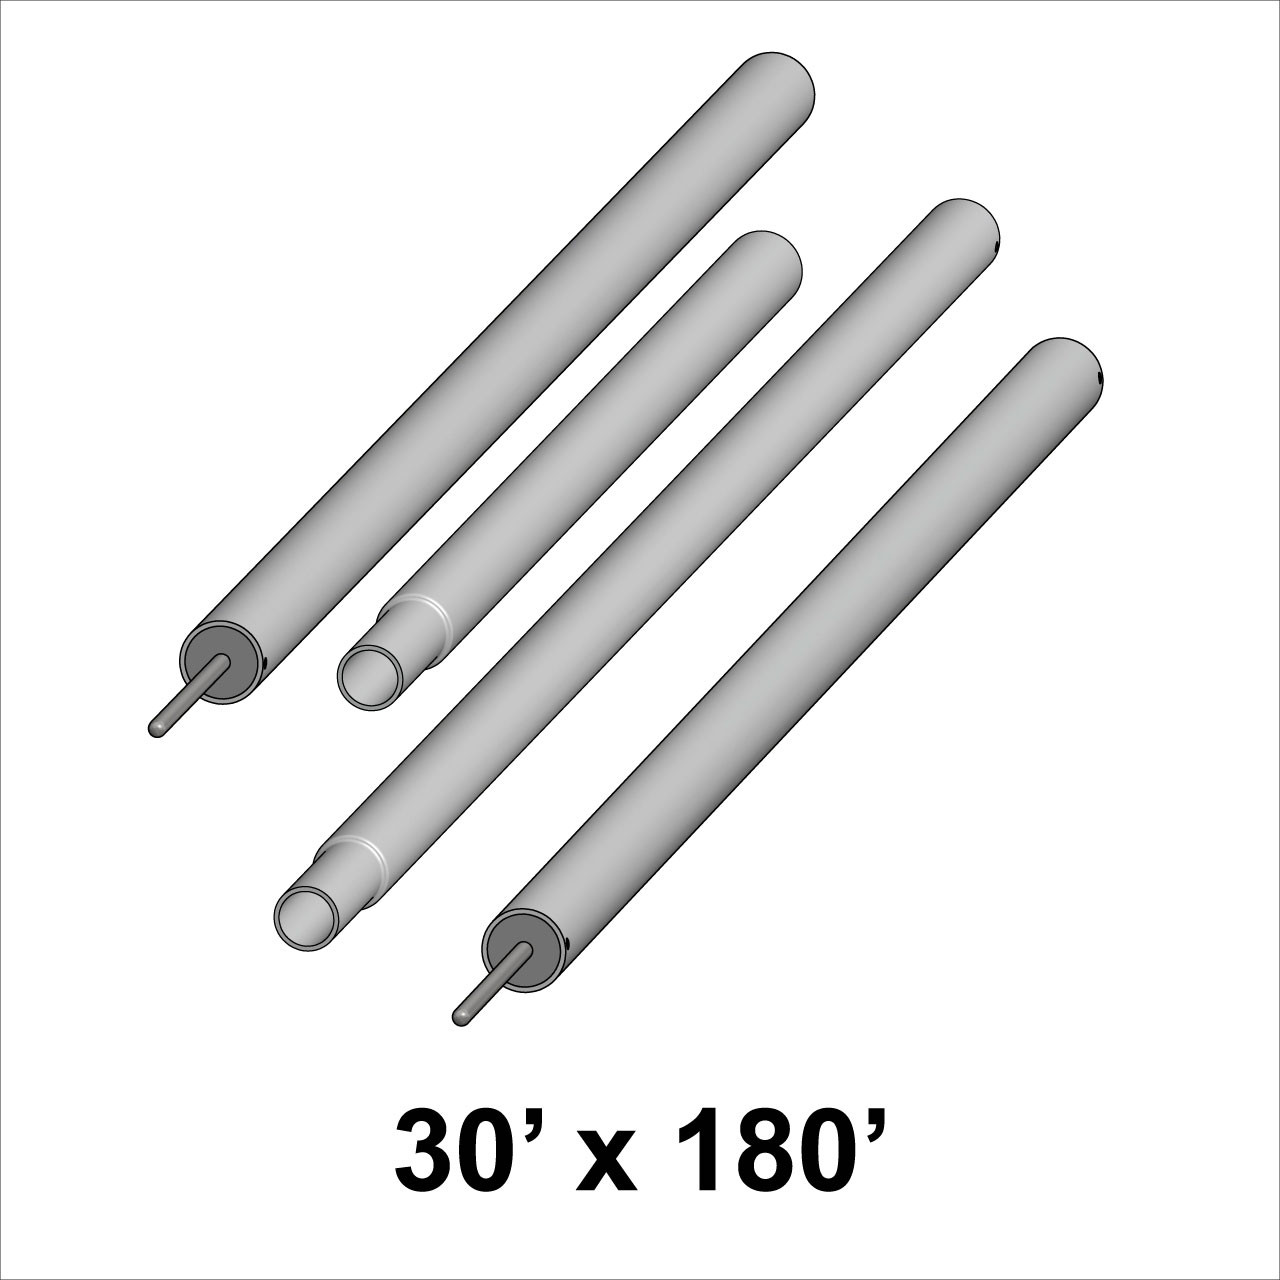 30' x 180' Classic Series Pole Kit